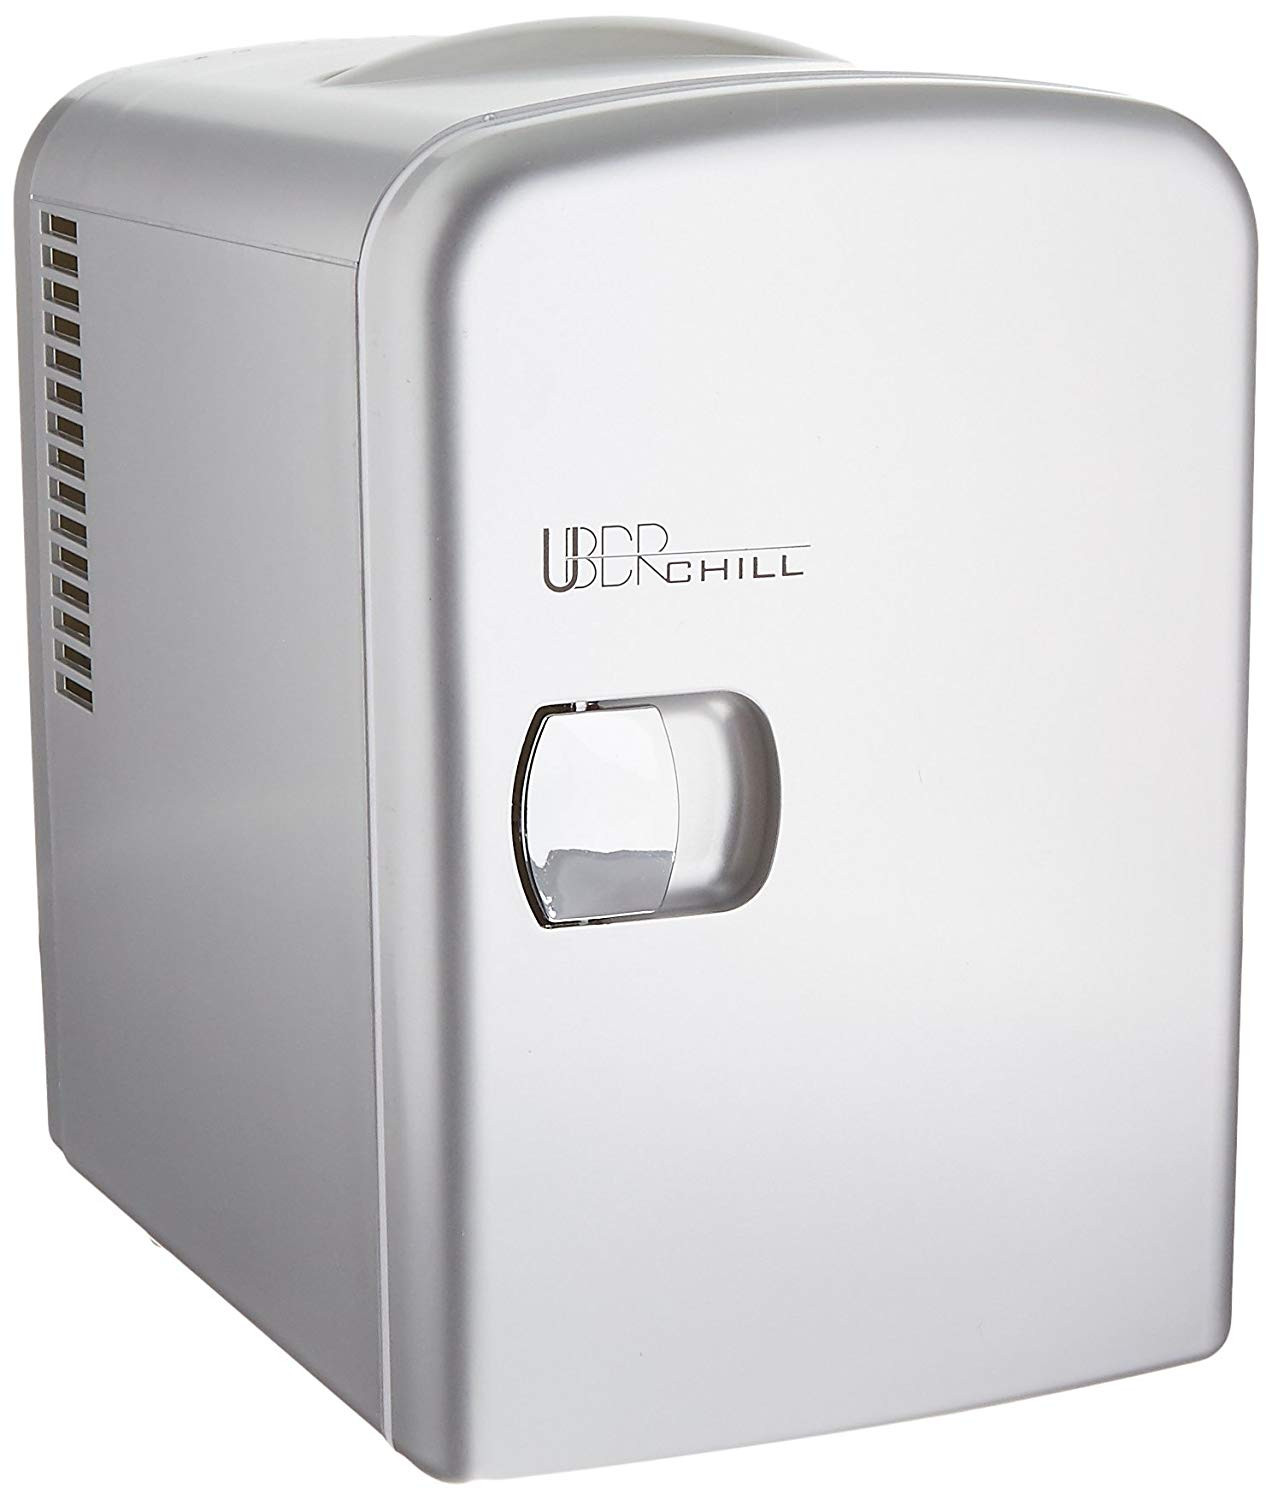 Small Refrigerator For Bedroom
 Portable Small pact Fridge Refrigerator Cooler & Warmer